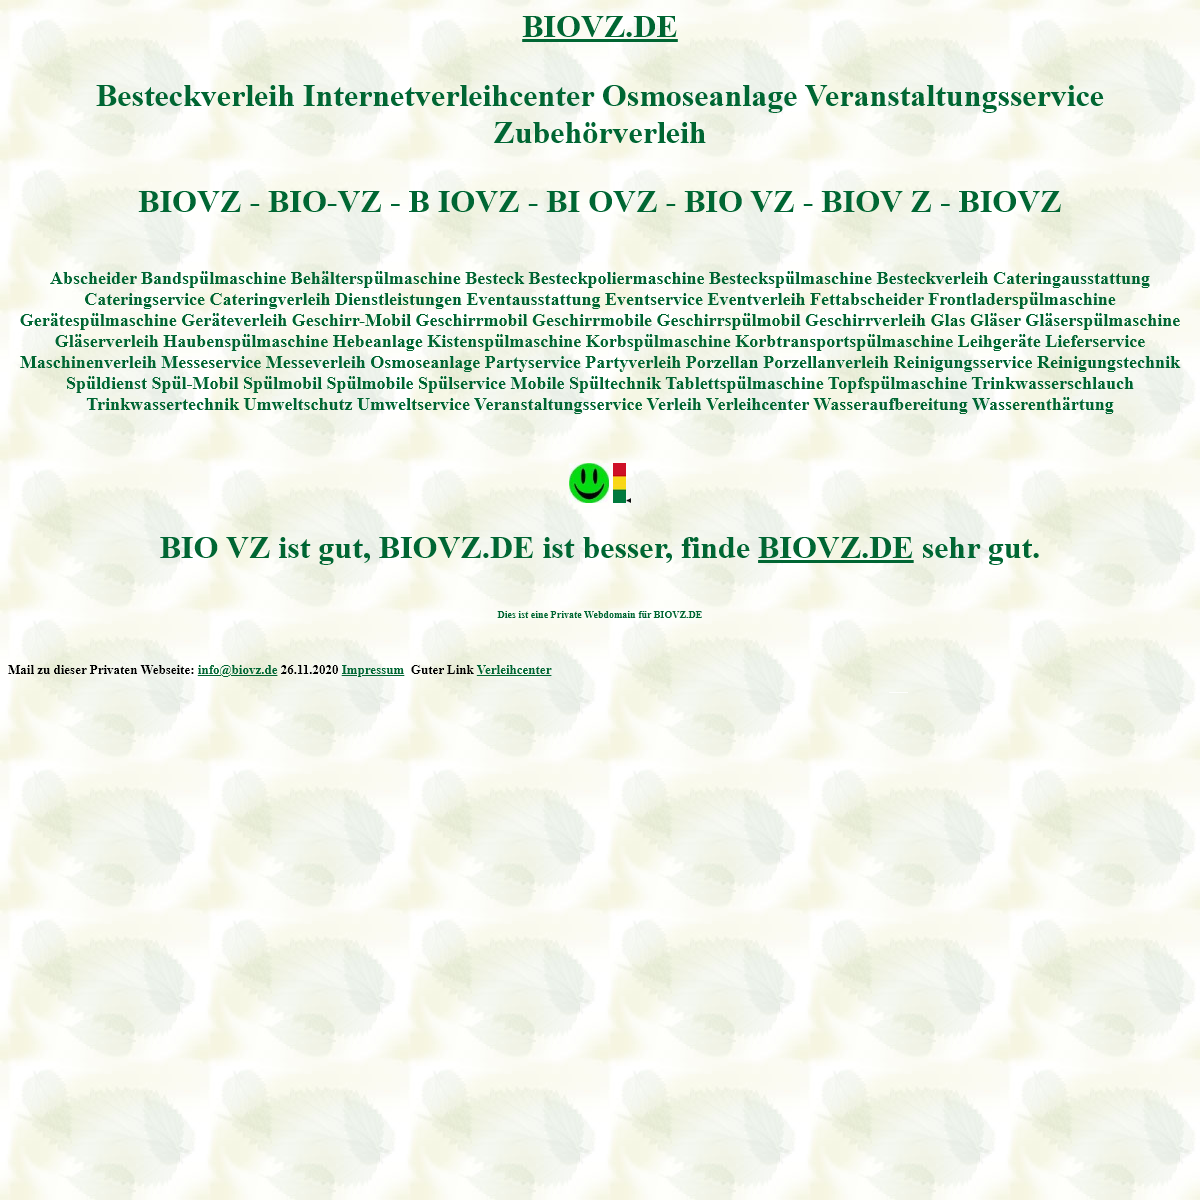 A complete backup of biovz.de